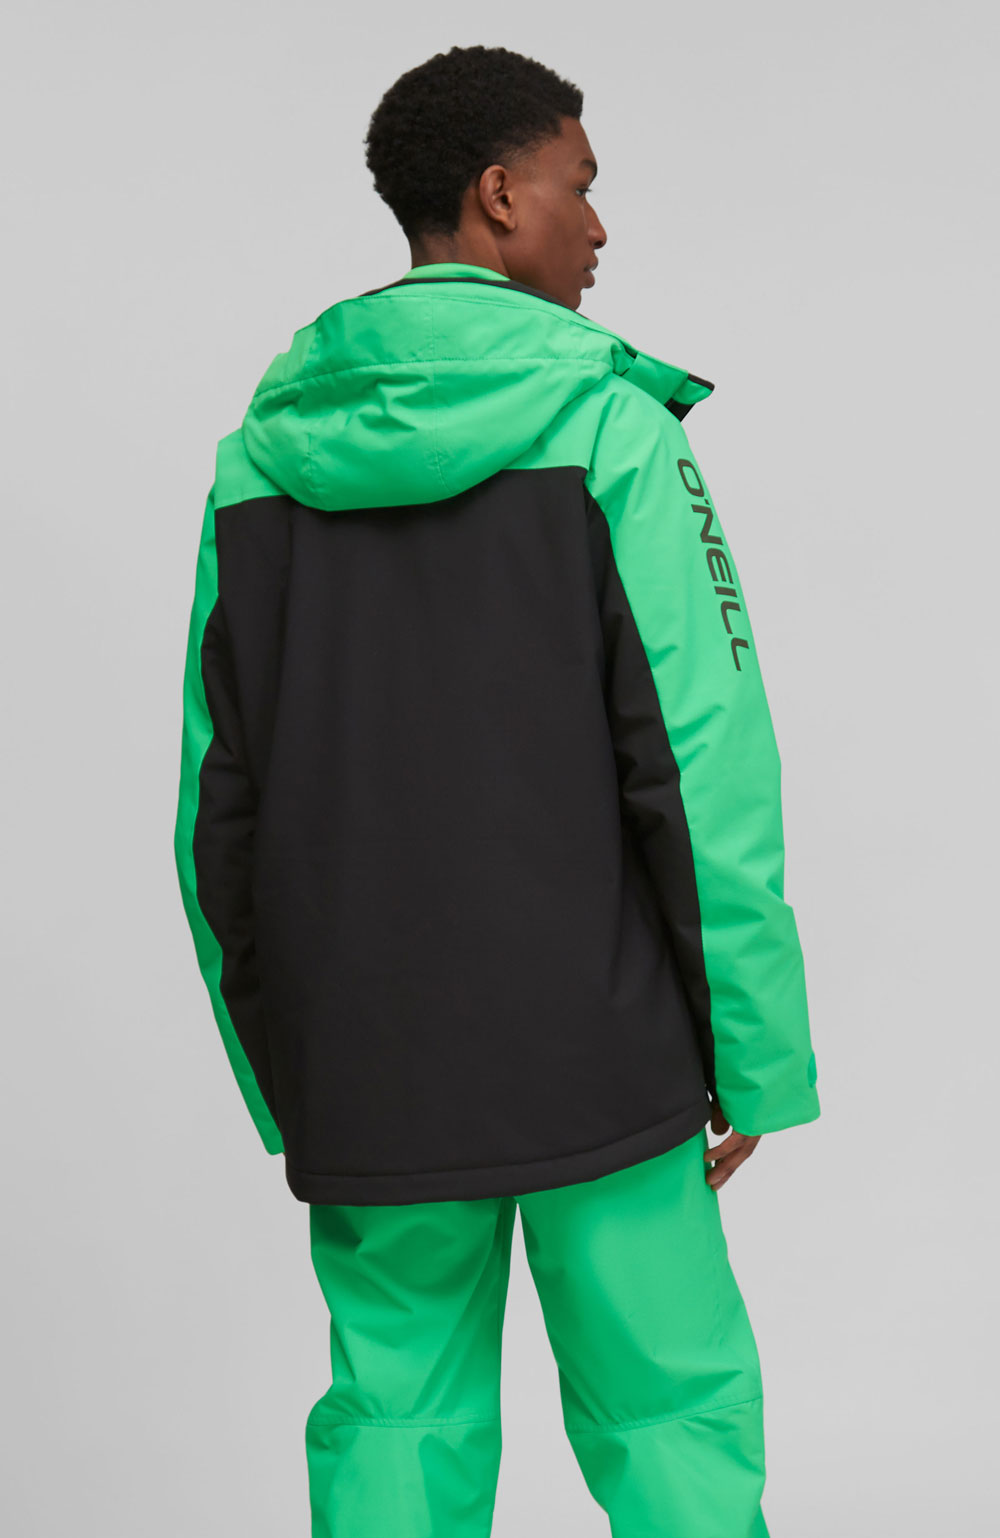 Men's ski/snowboard jacket